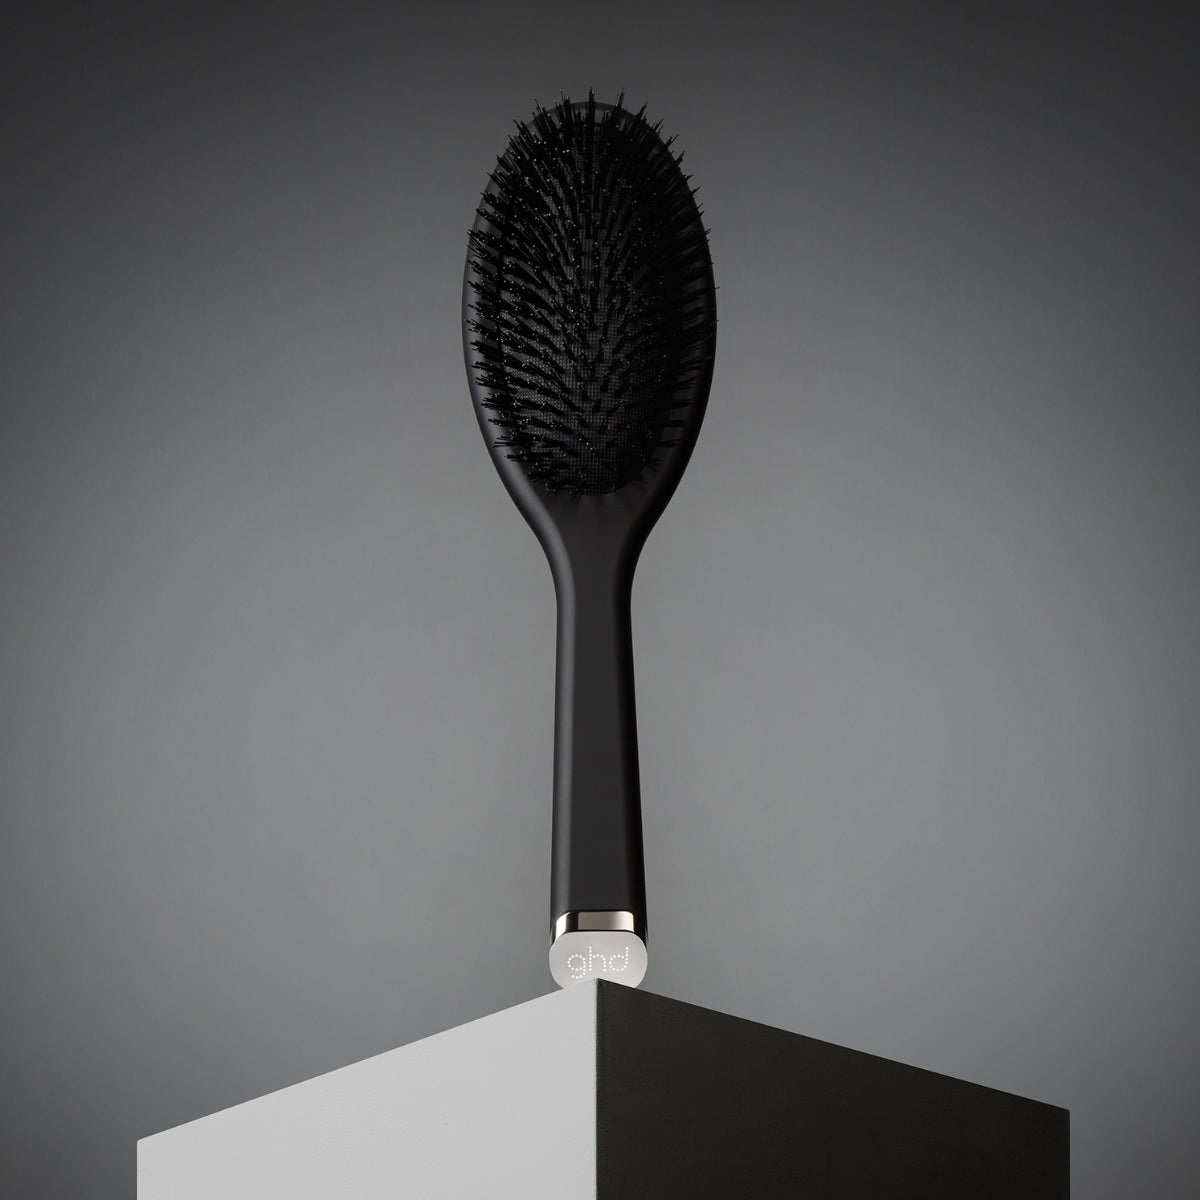 Ghd The Dresser - Oval Hair Brush